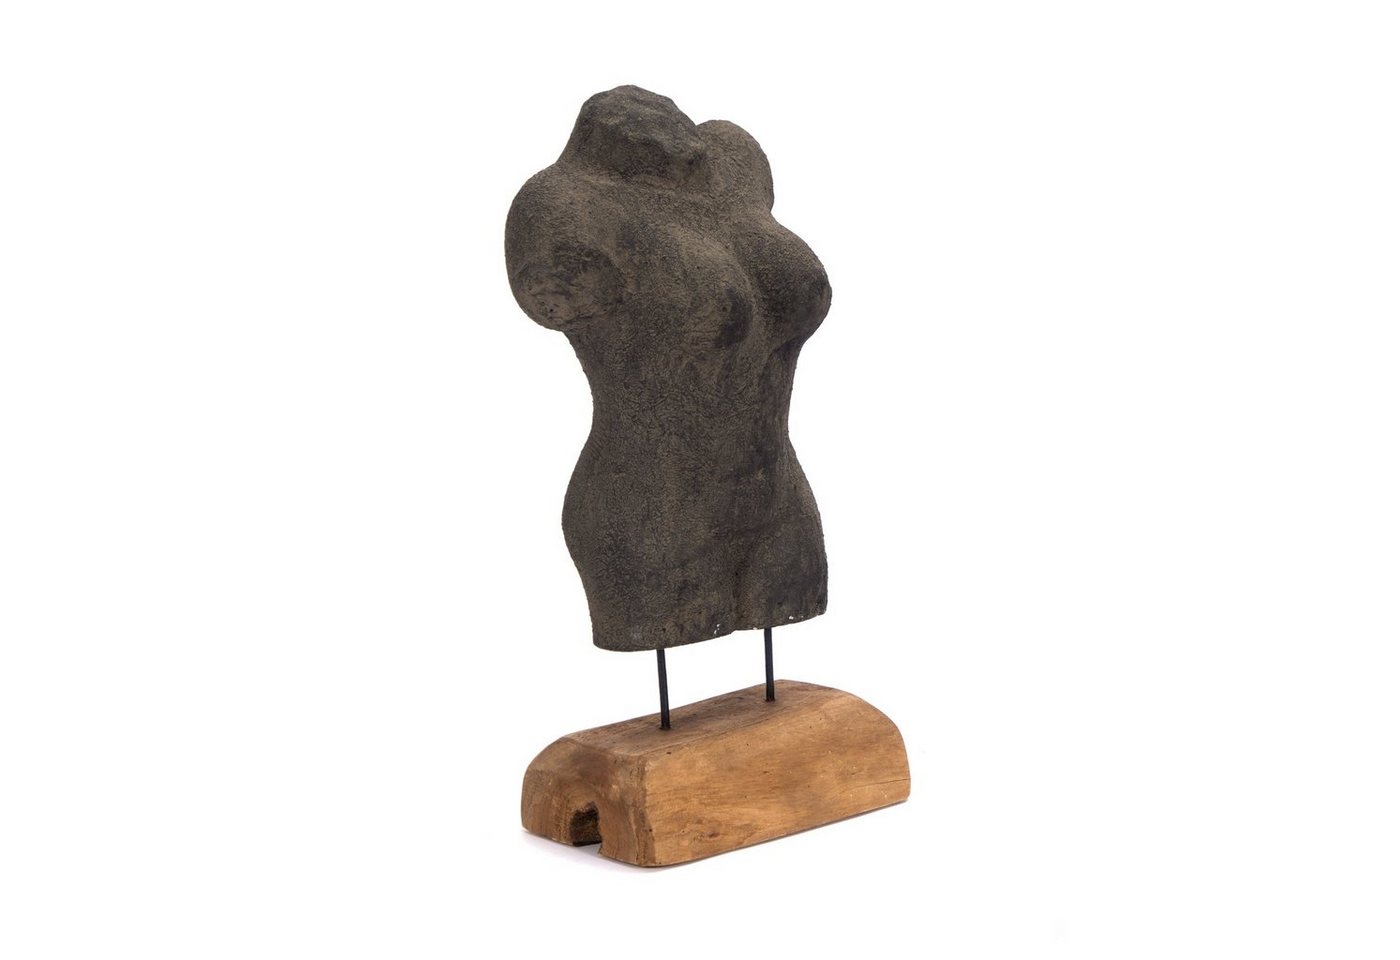 CREEDWOOD Skulptur SKULPTUR FEMME", Beton, 54 cm, Weiblicher Torso, Deko Objekt Körper" von CREEDWOOD